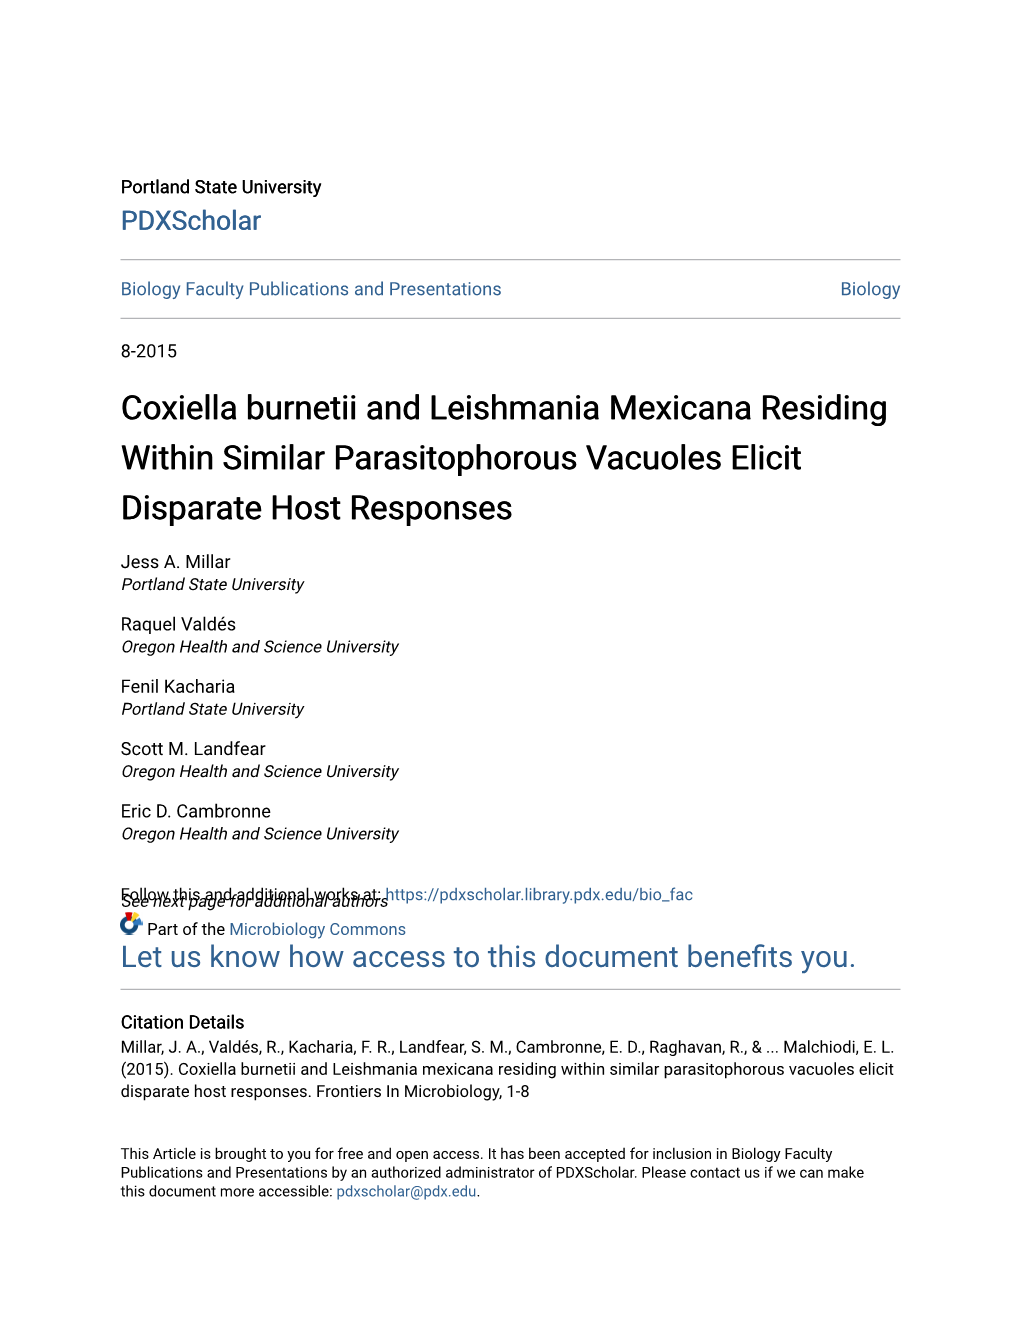 Coxiella Burnetii and Leishmania Mexicana Residing Within Similar Parasitophorous Vacuoles Elicit Disparate Host Responses